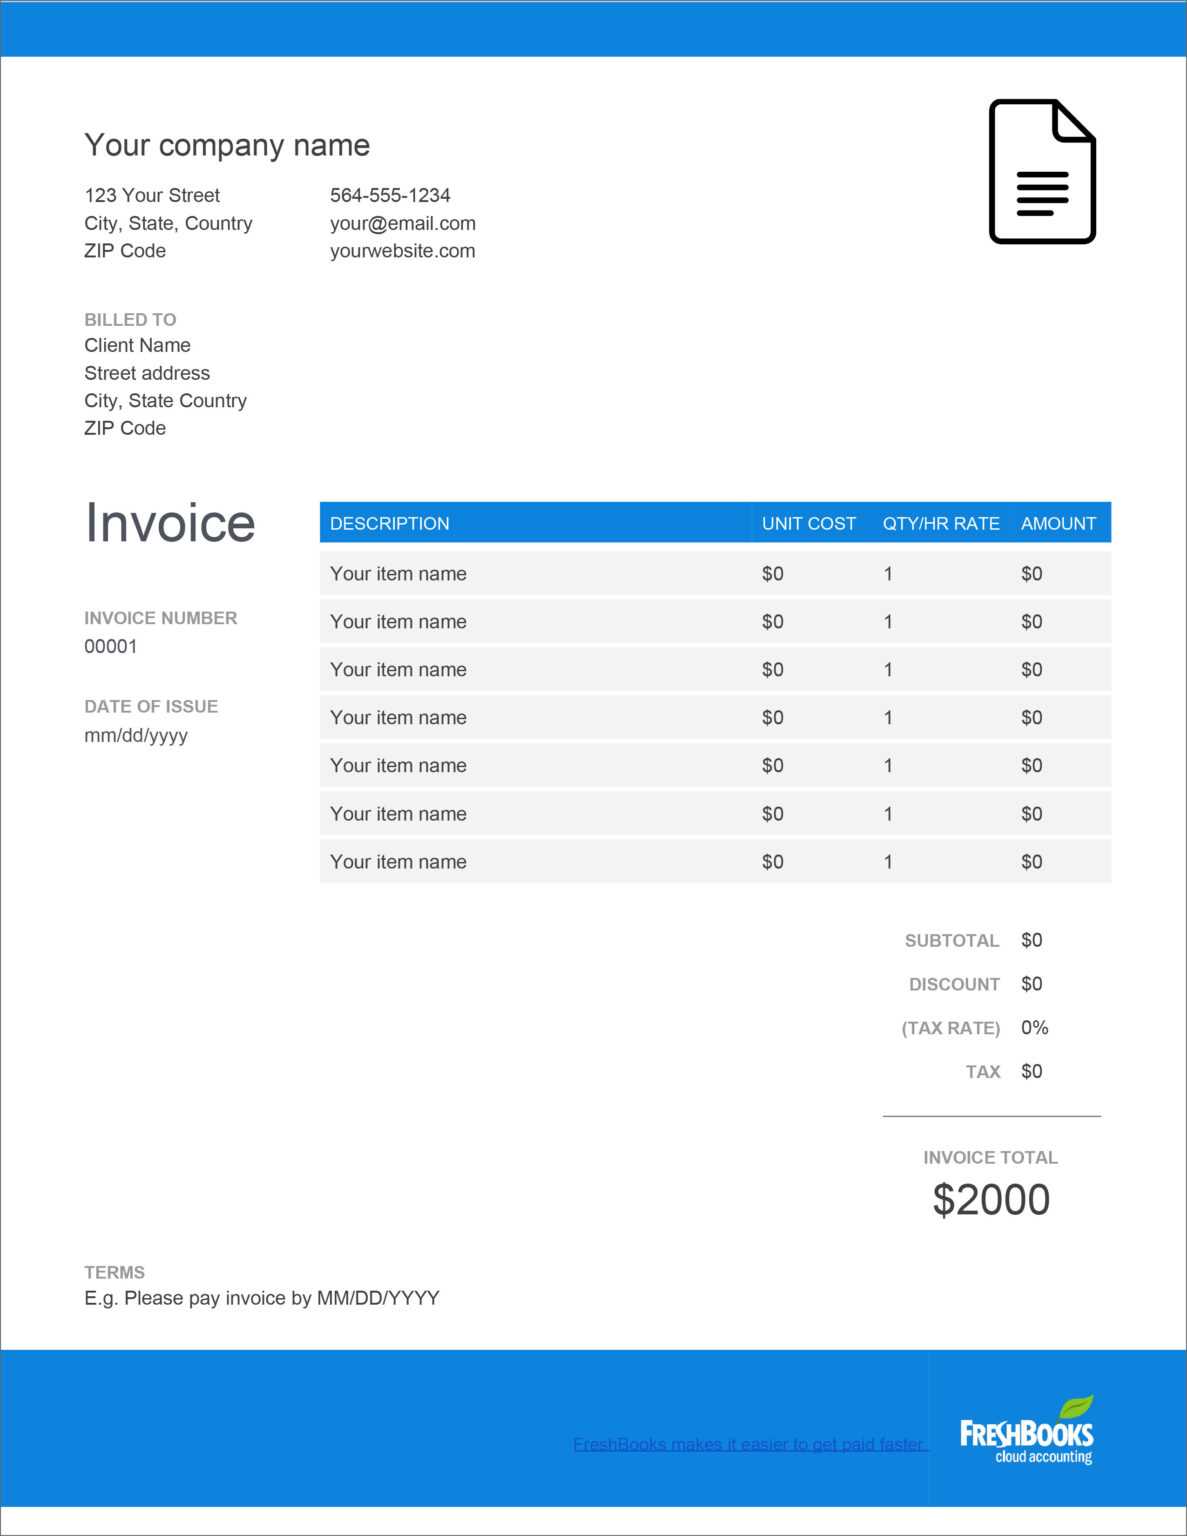 invoice microsoft